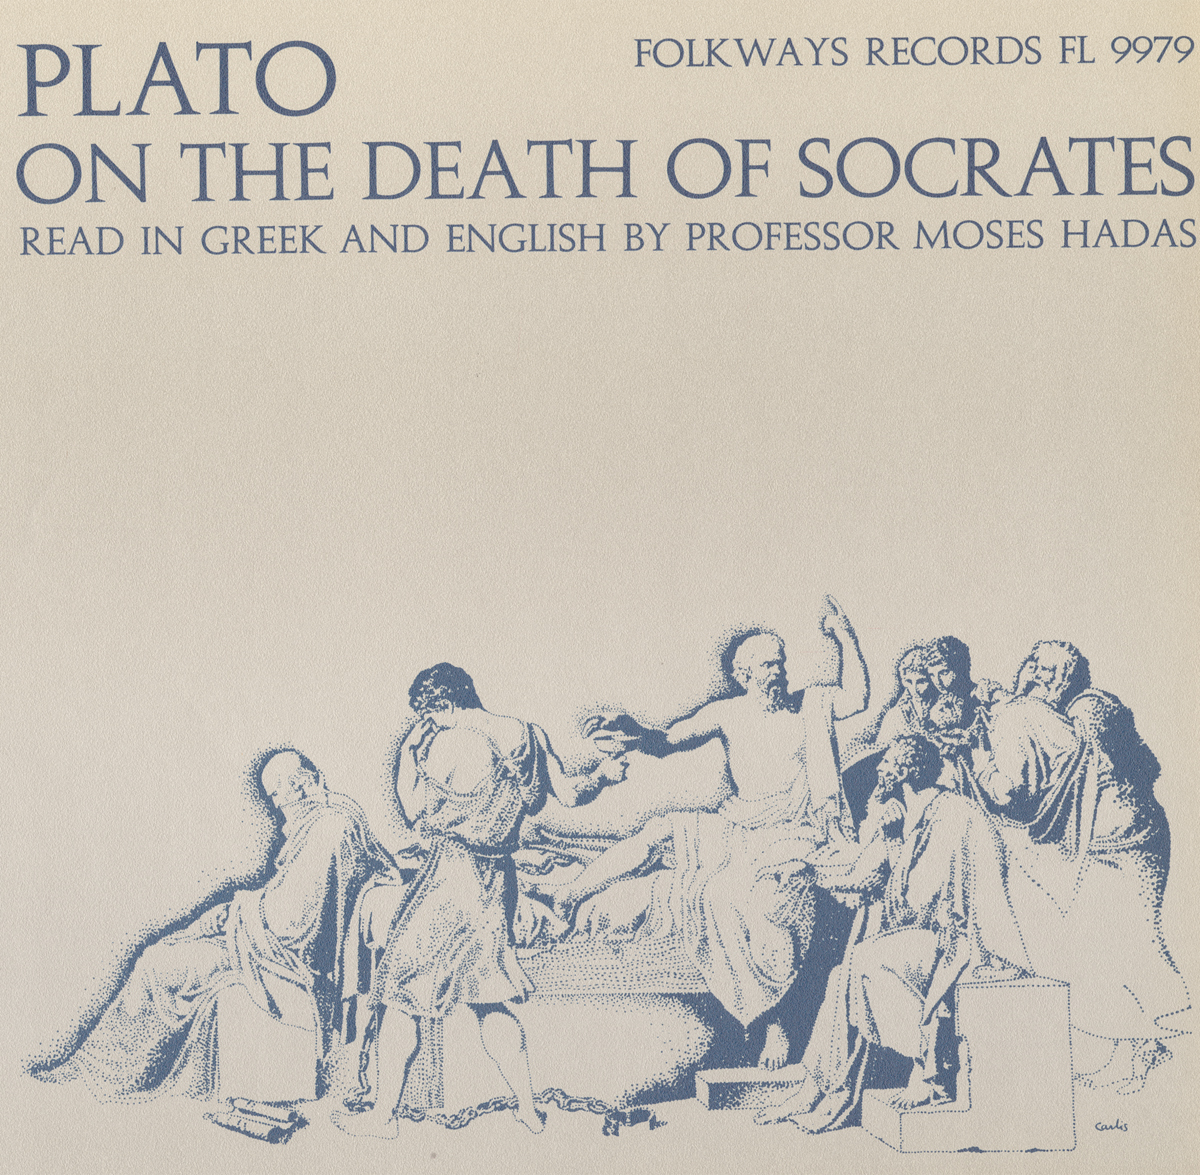 PLATO ON THE DEATH OF SOCRATES